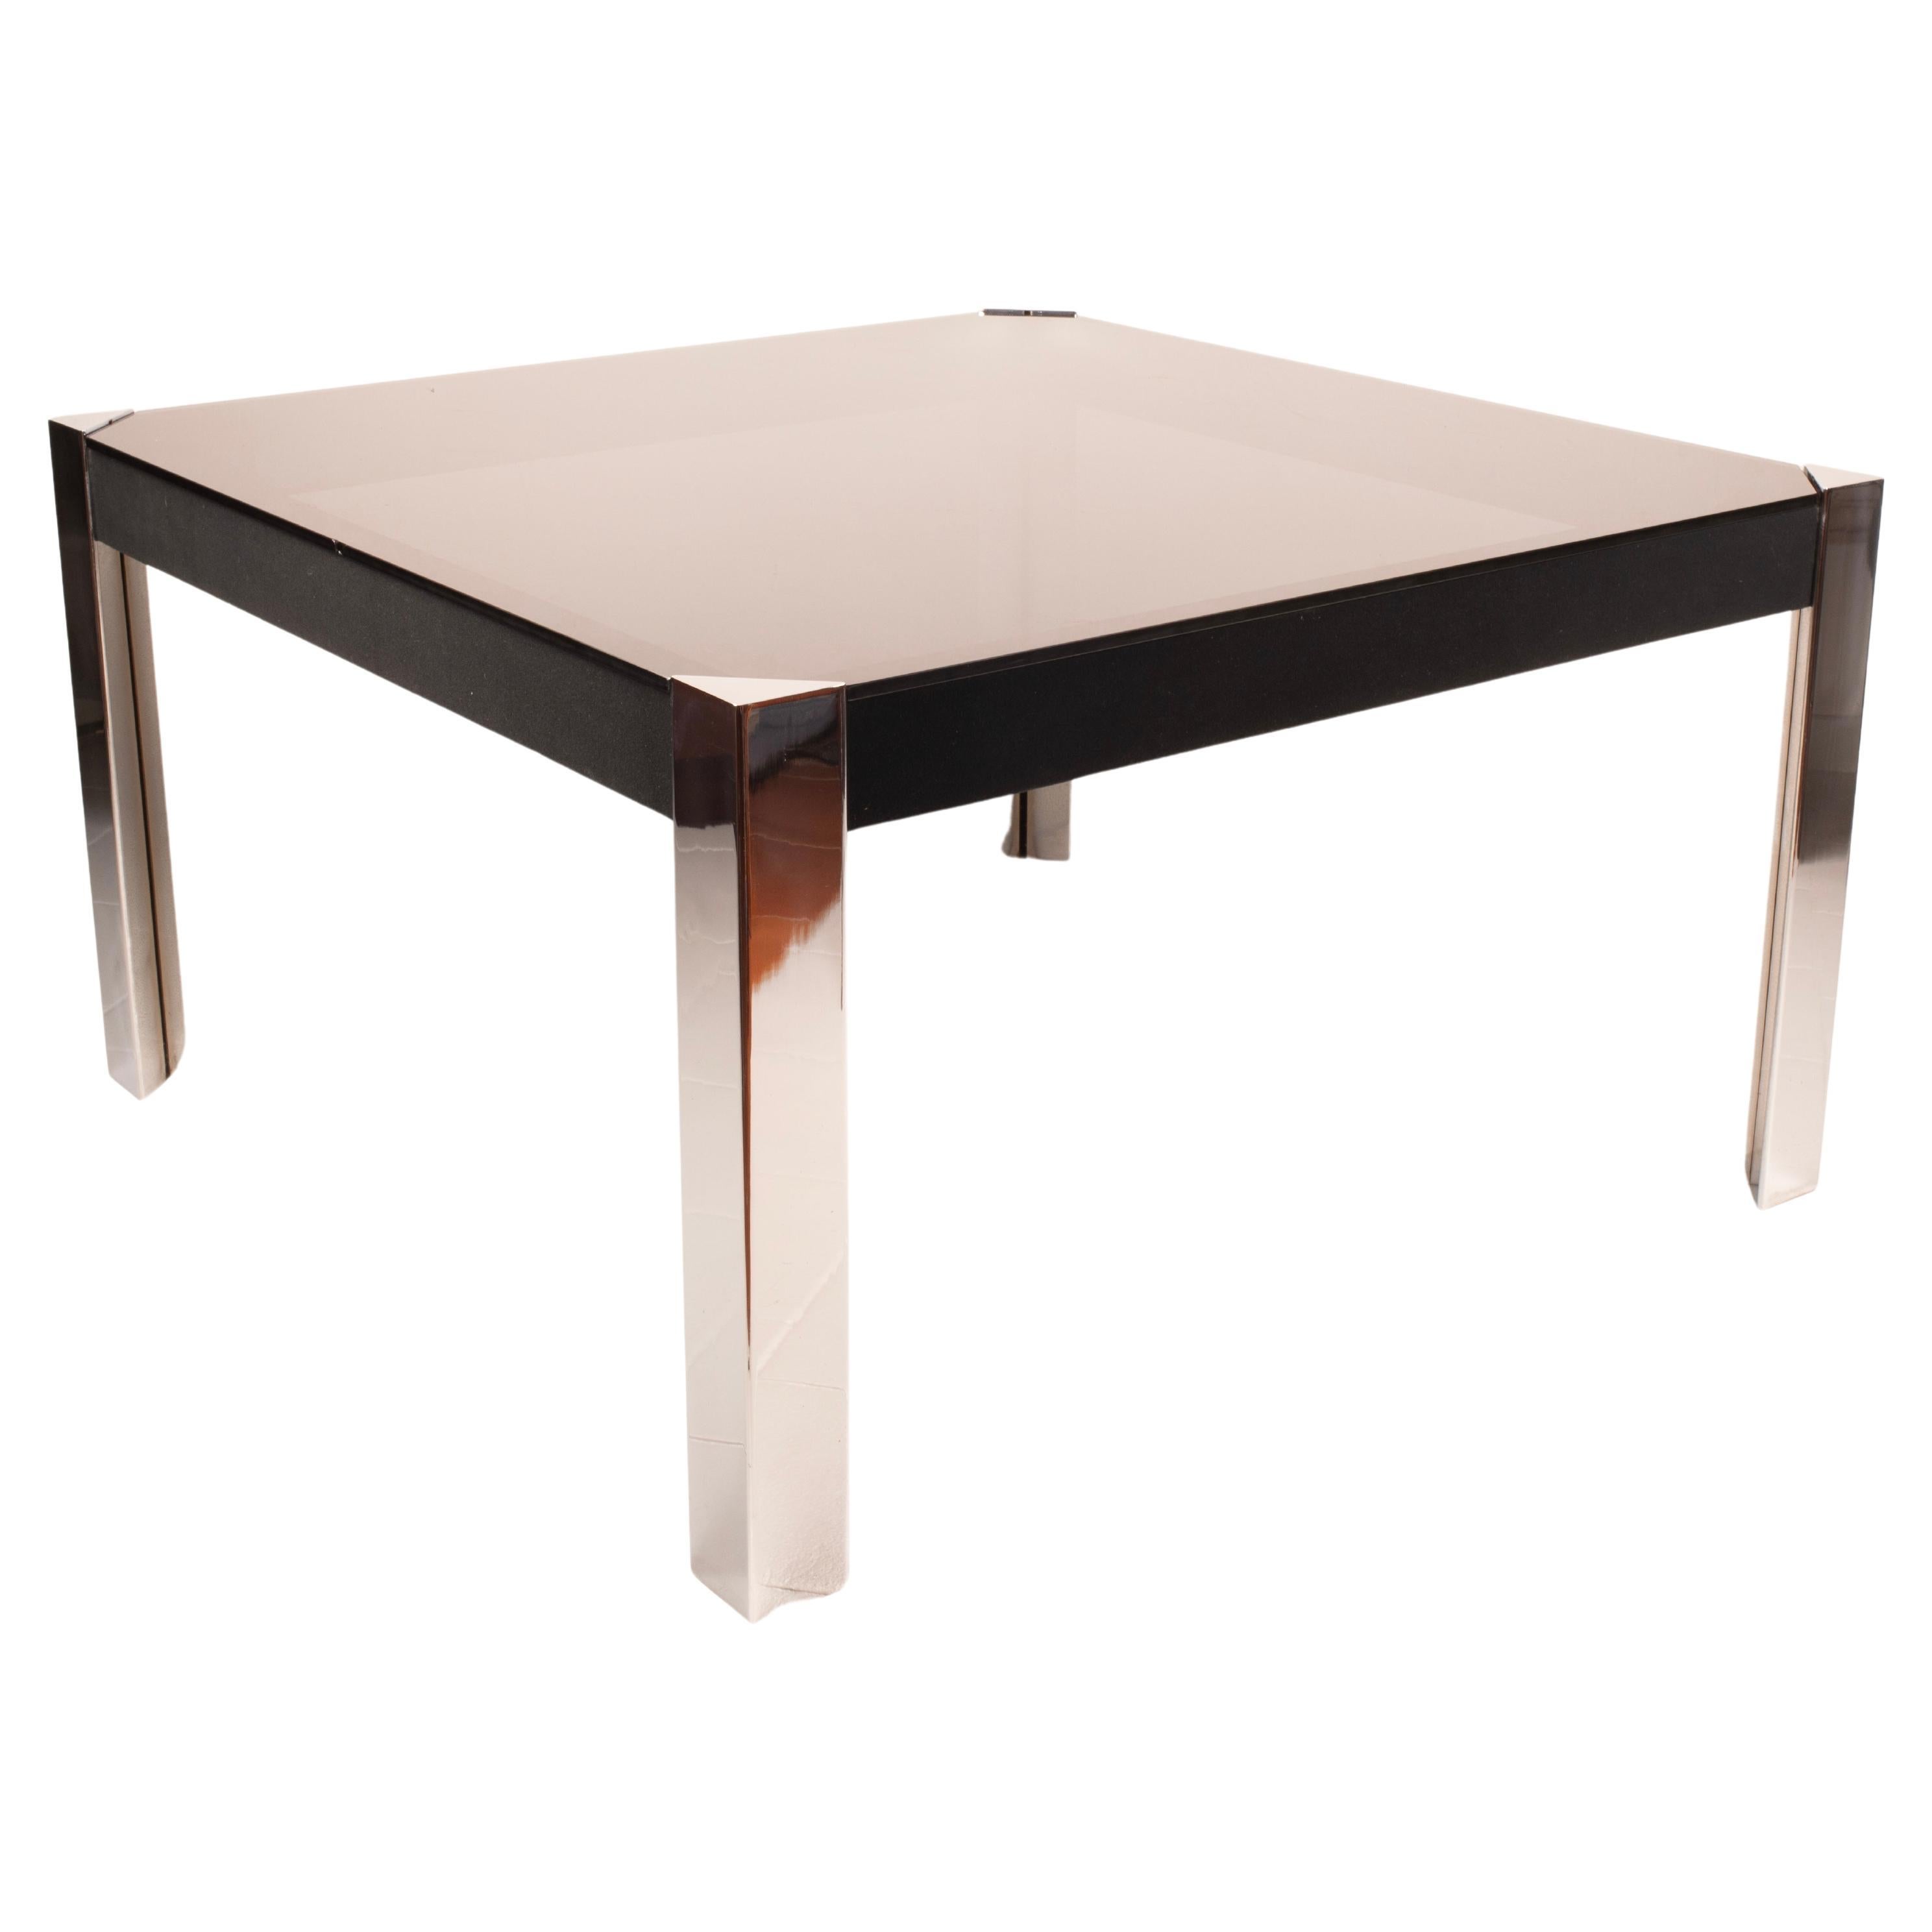 Guido Faleschini for Mariani "Tucroma" table For Sale